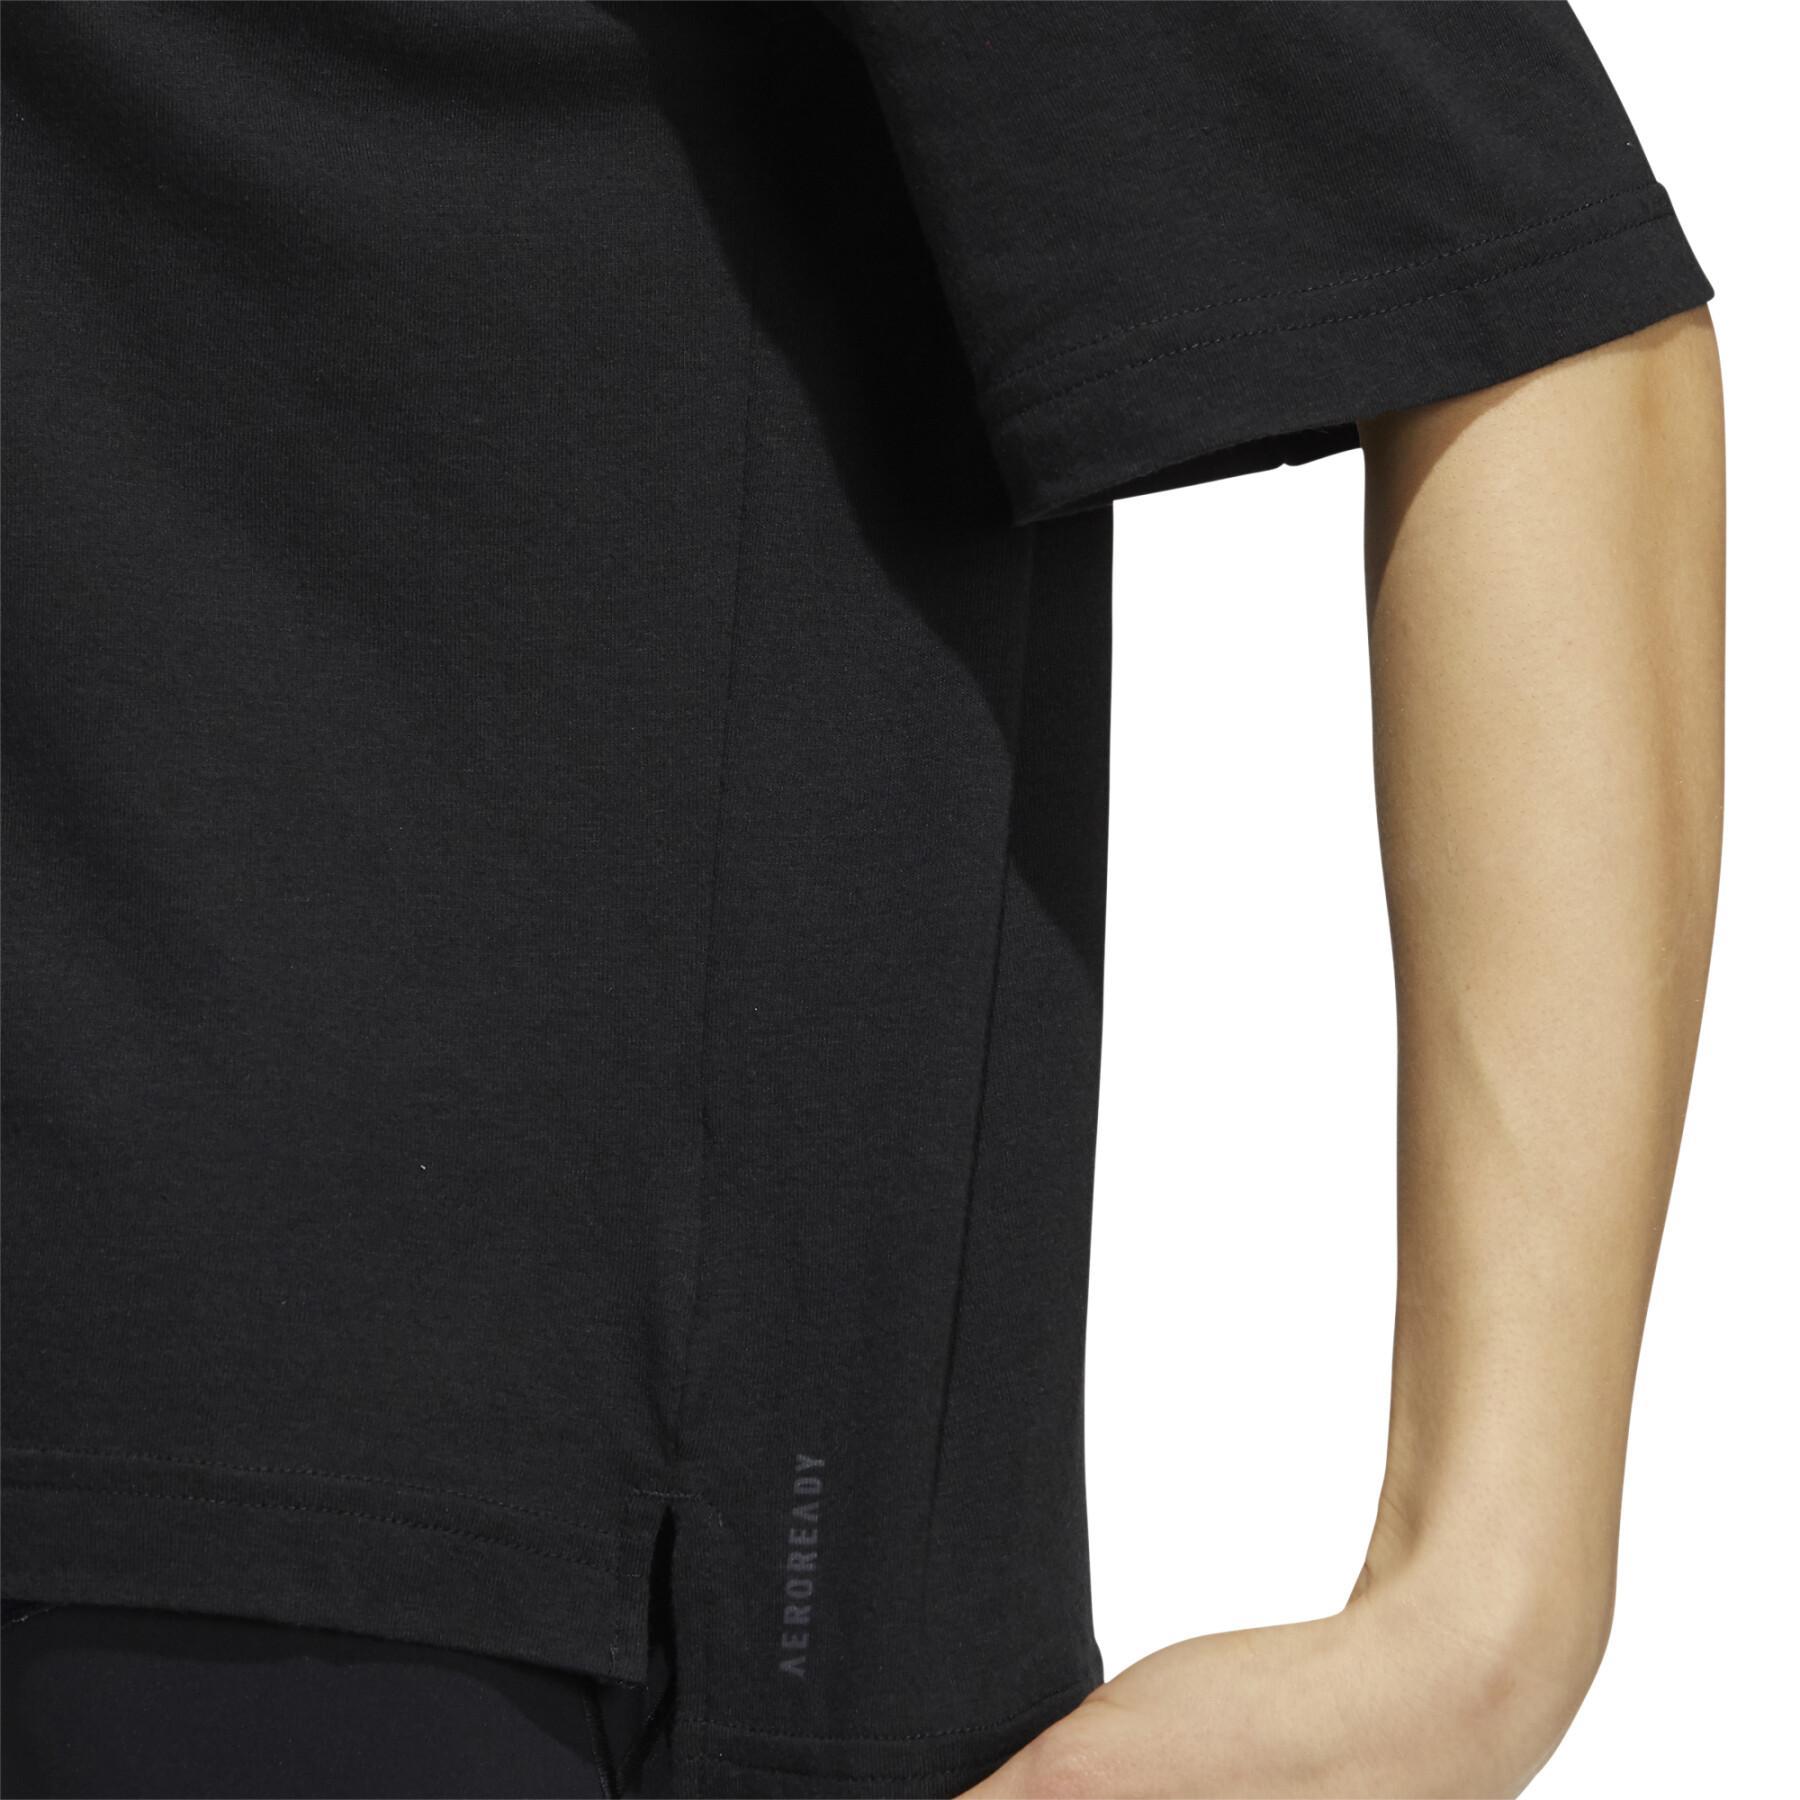 Women's T-shirt adidas Camp Graphic Universal Sleeve